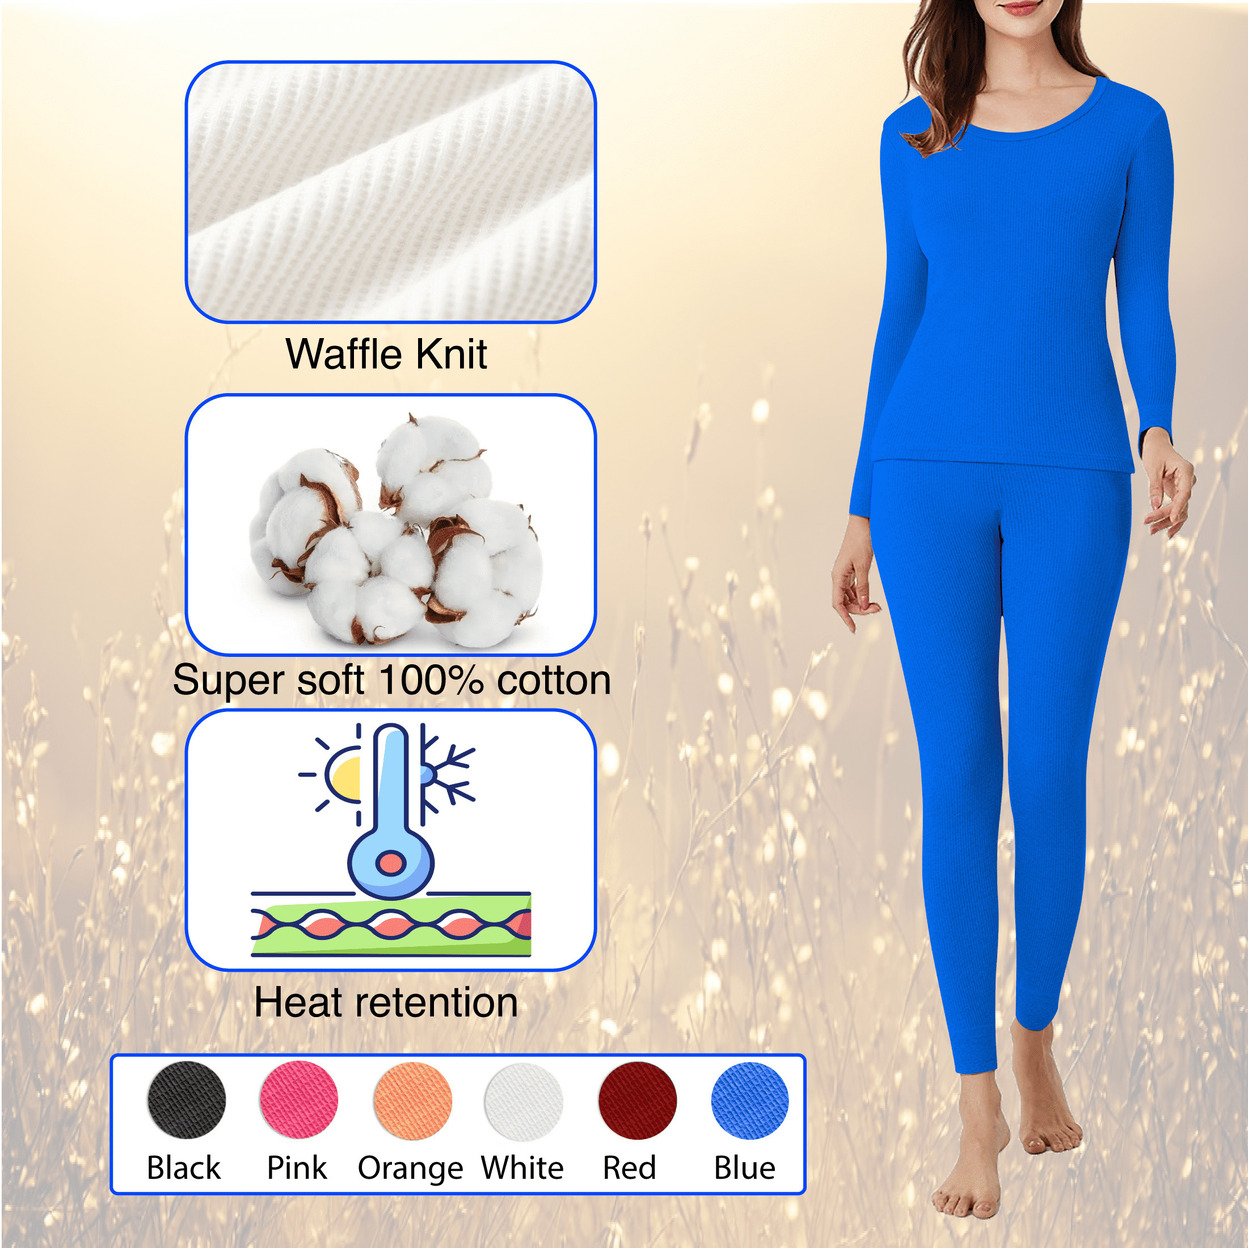 2-Piece: Women's Ultra Soft Cotton Waffle Knit Thermal Sets - Blue, Small